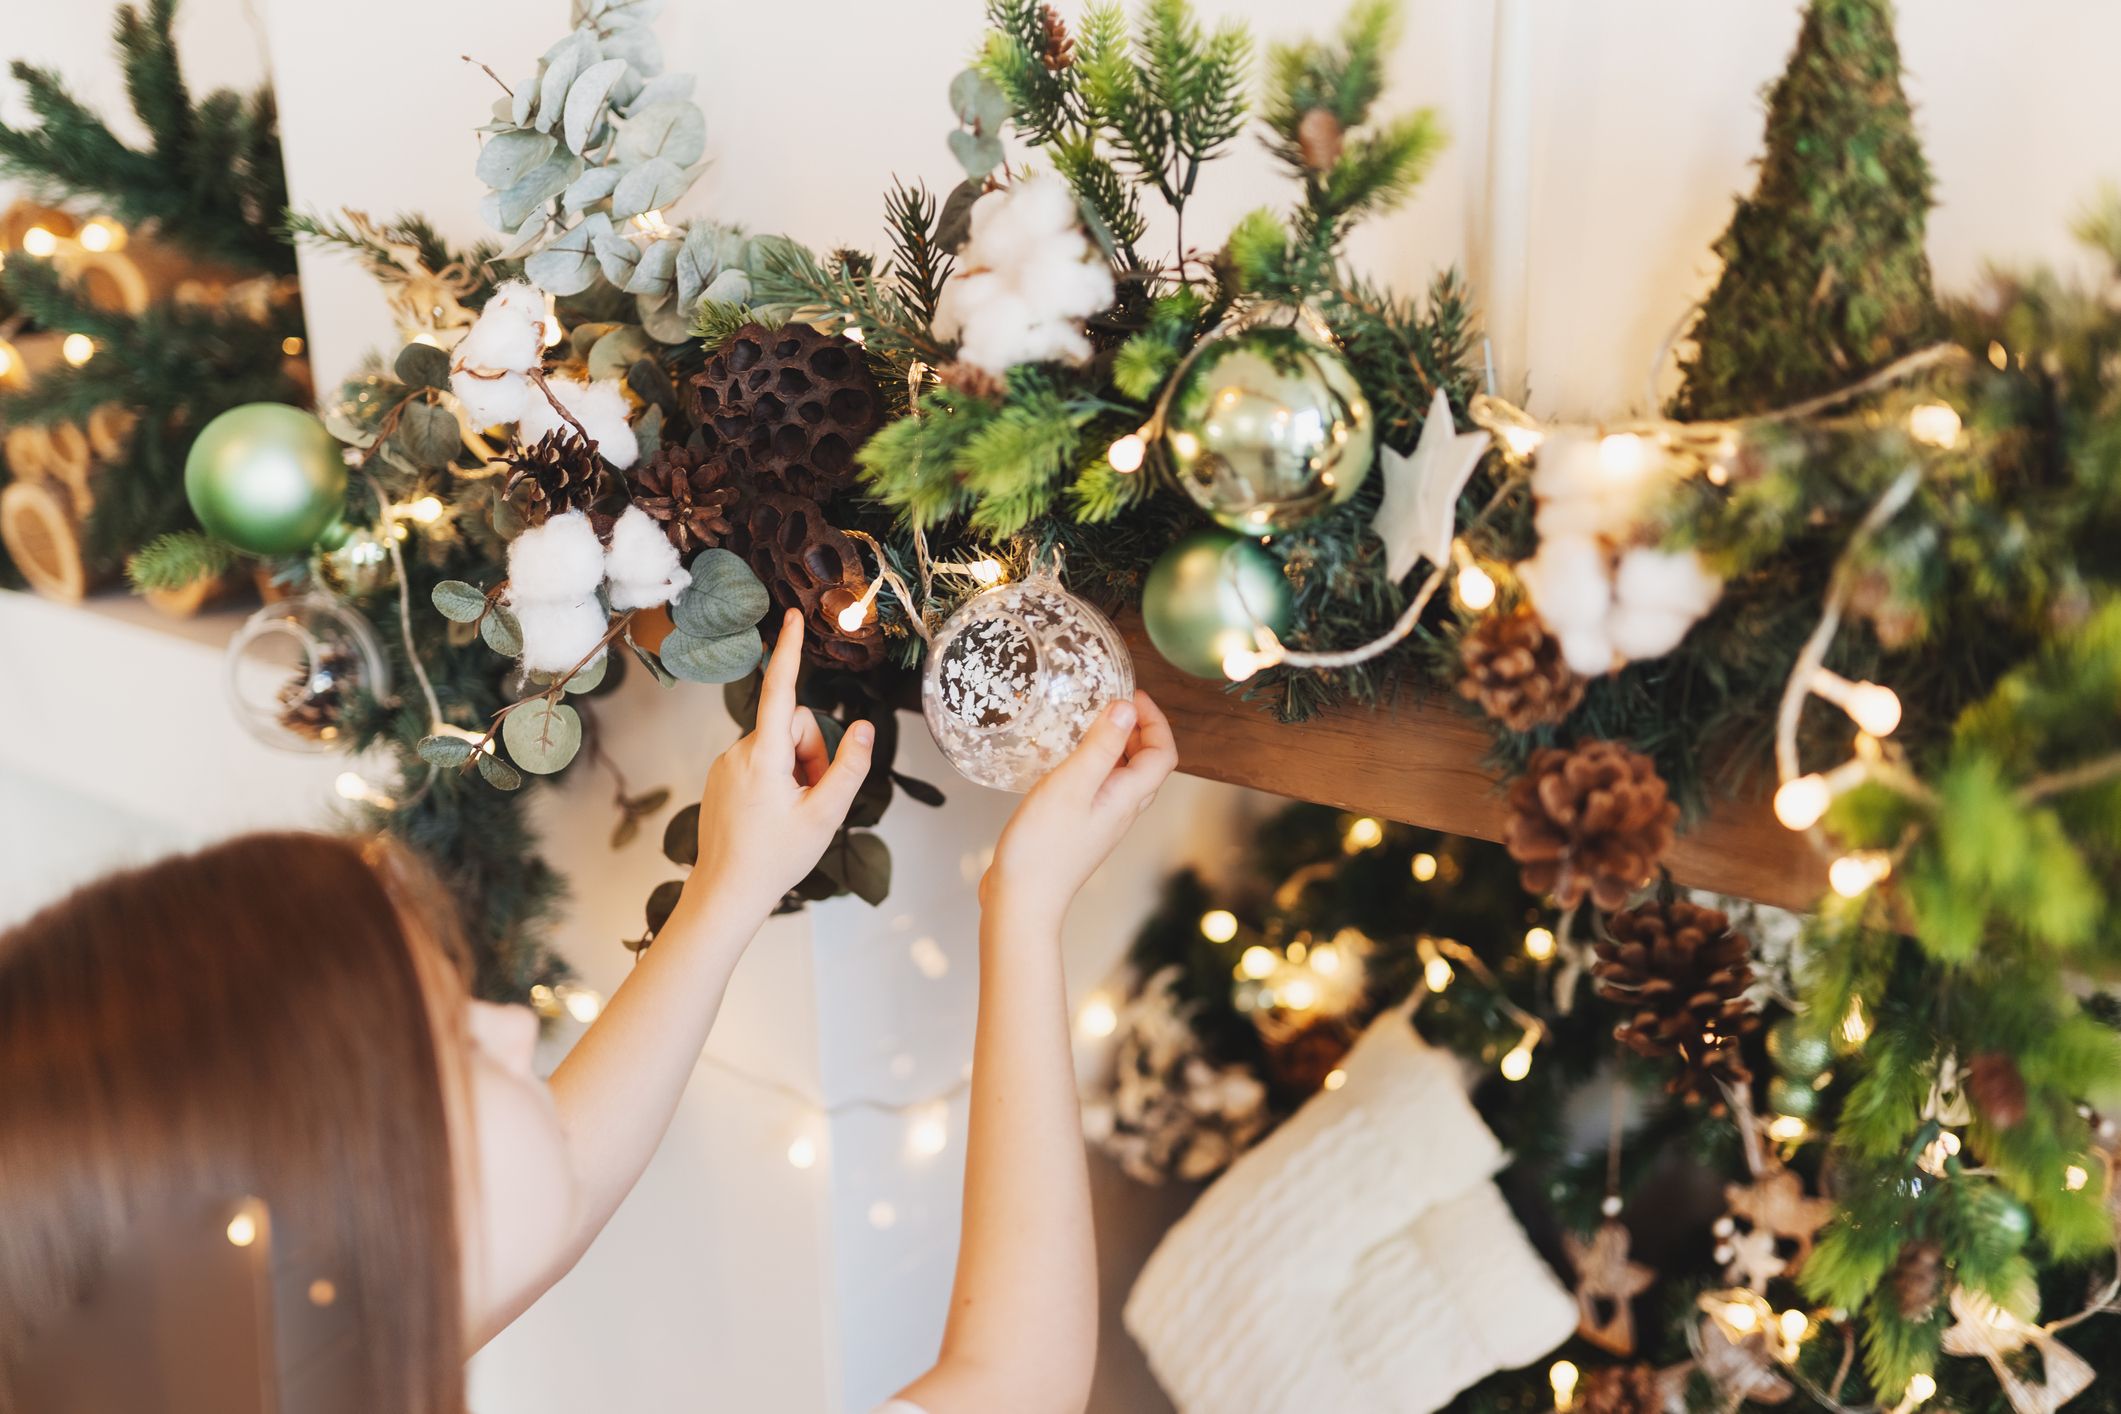 Los Angles' Best Christmas Trees & Decor | Showroom - Aldik Home